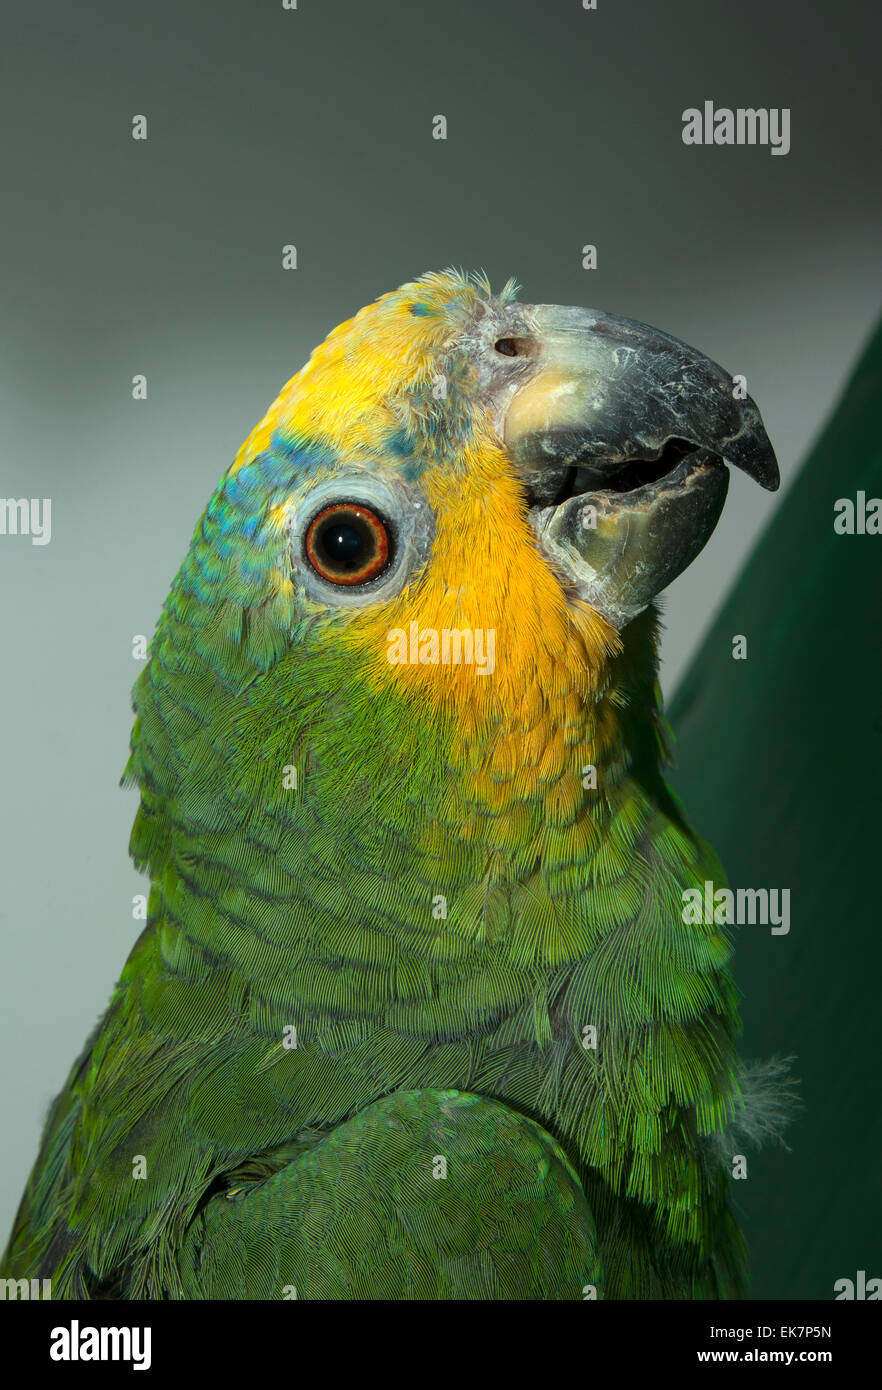 Parrot sidelobes Amazon.(Amazona aestiva). Stock Photo